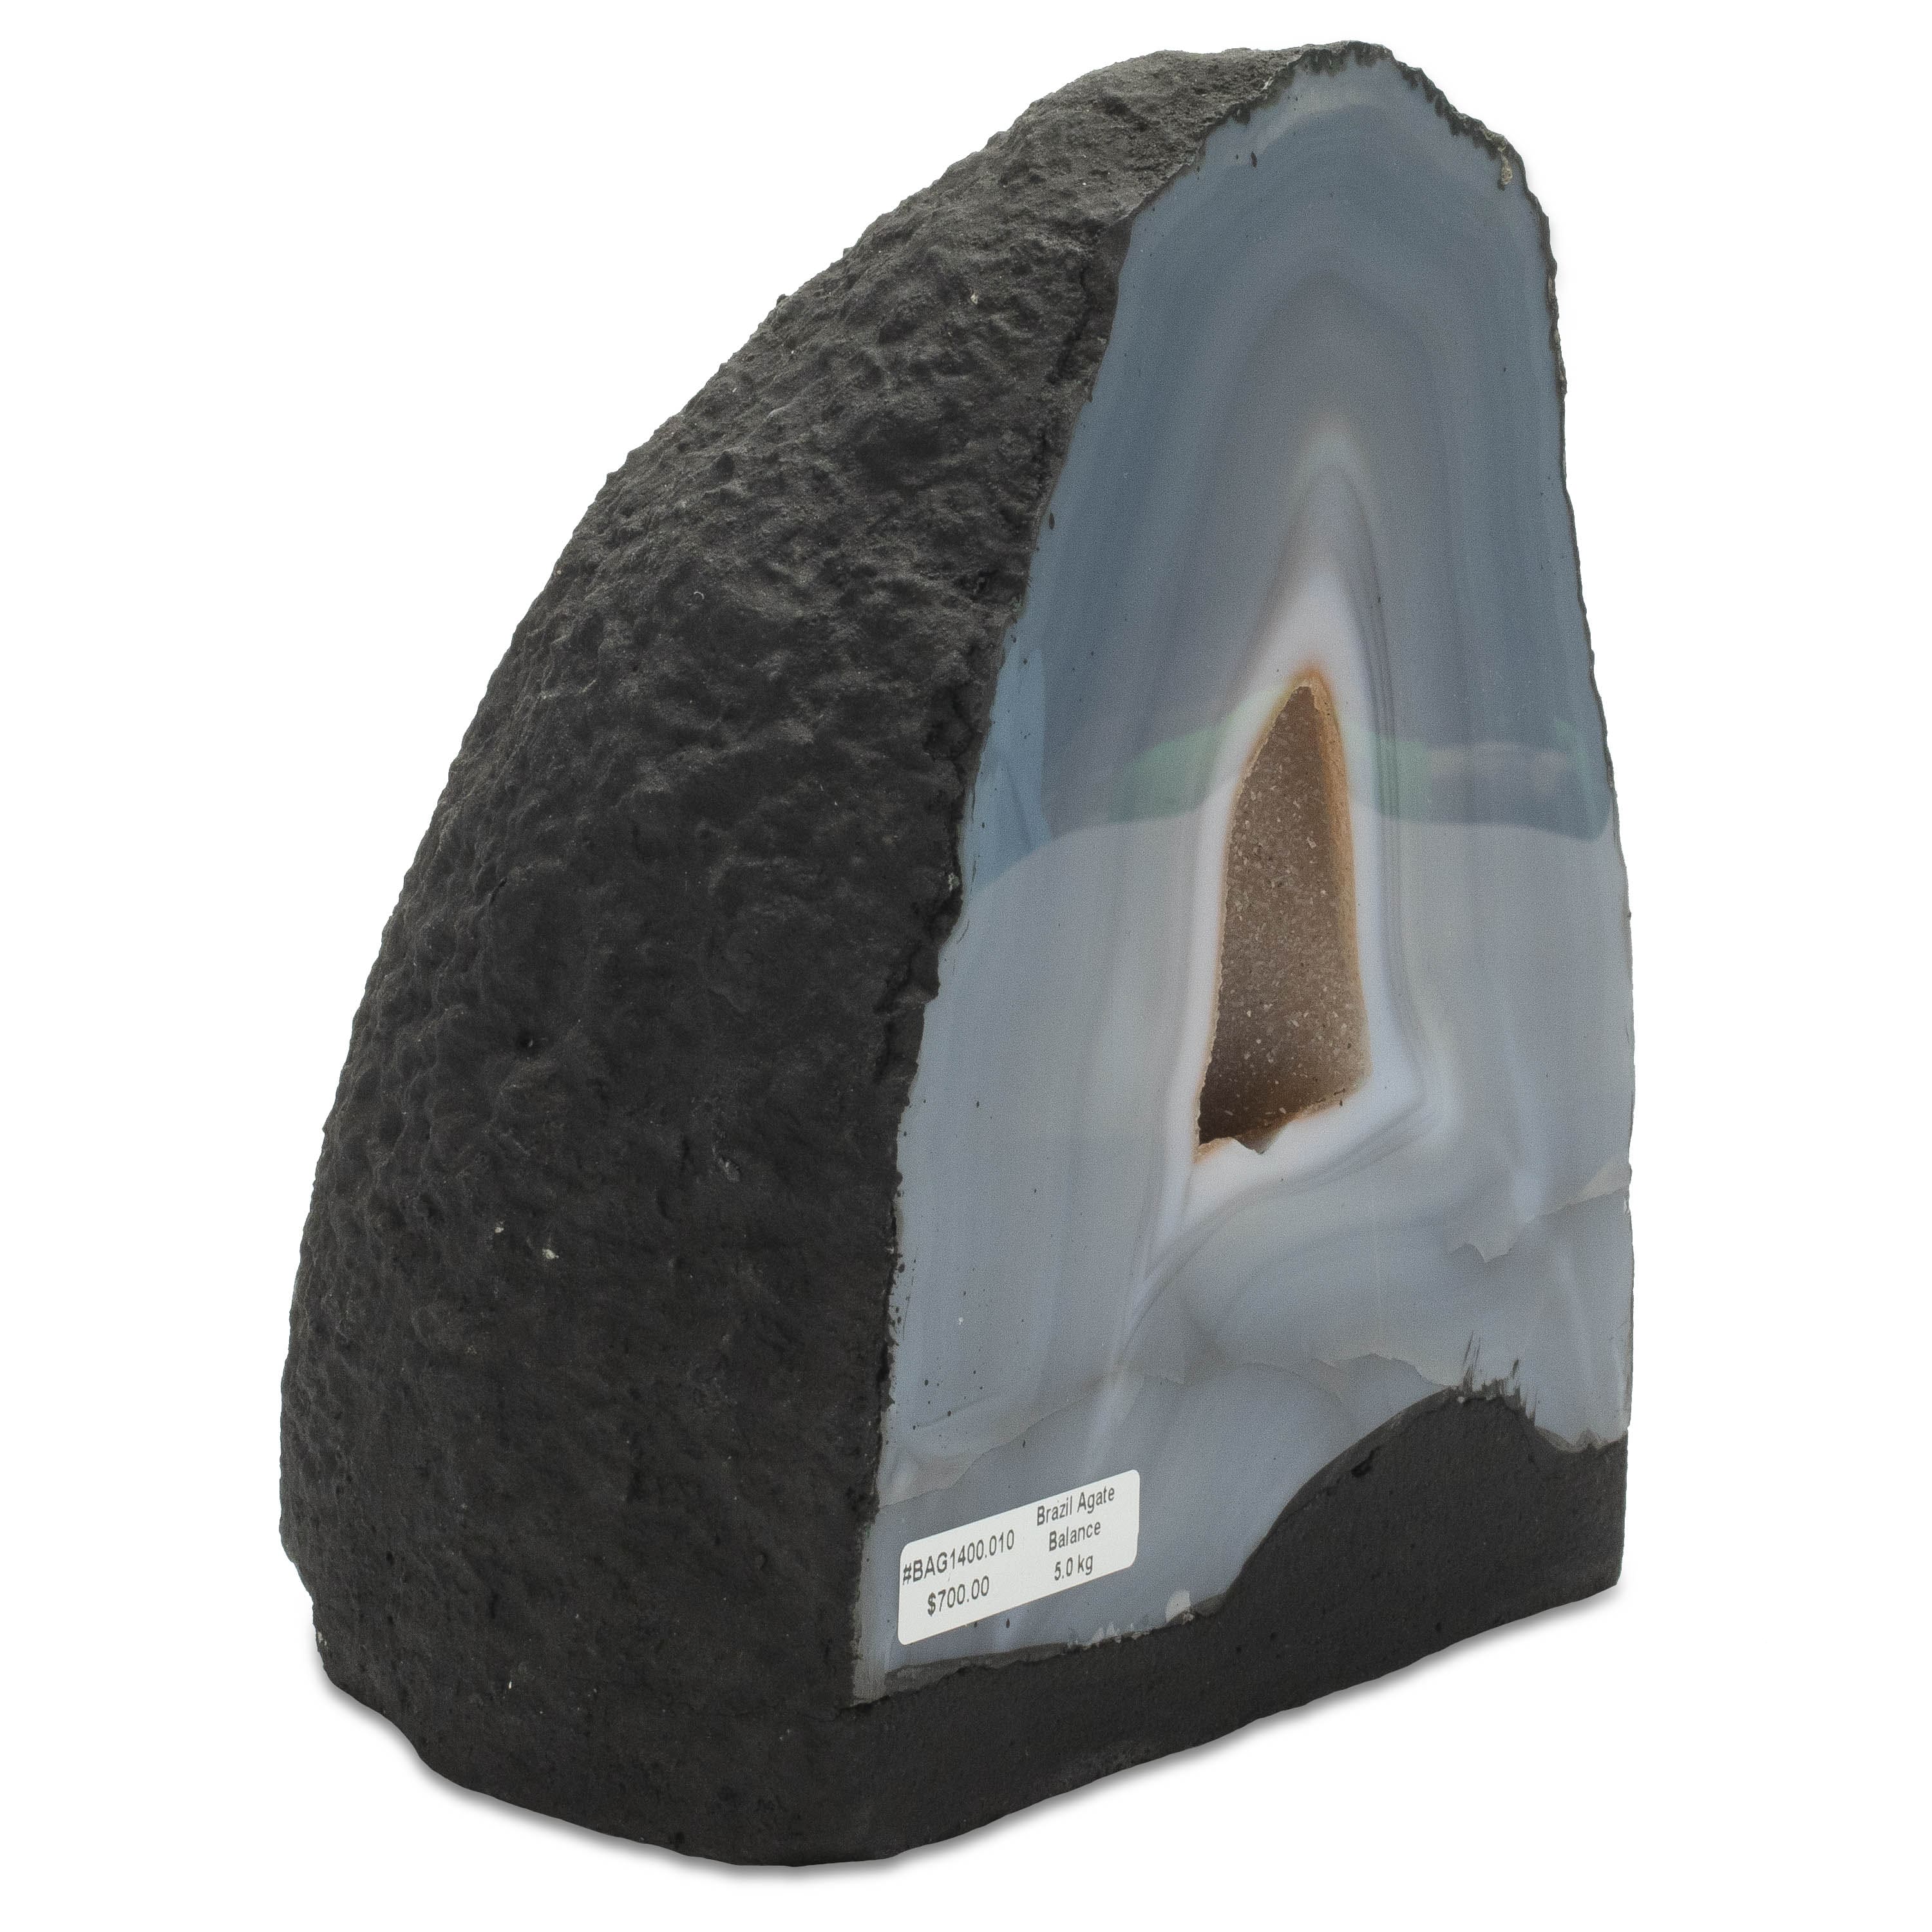 Kalifano Agate Agate Geode - 8 in. / 11 lbs BAG1400.010